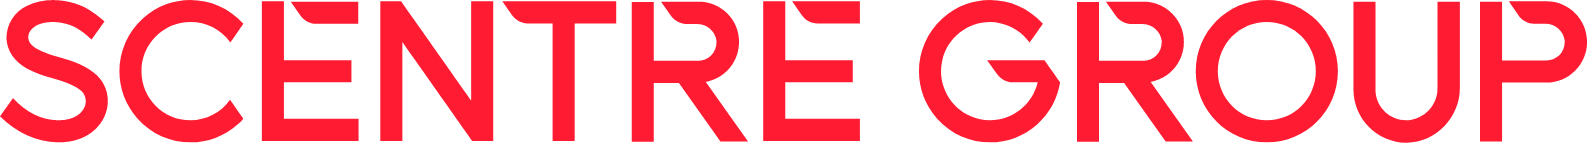 Scentre Group logo large (transparent PNG)